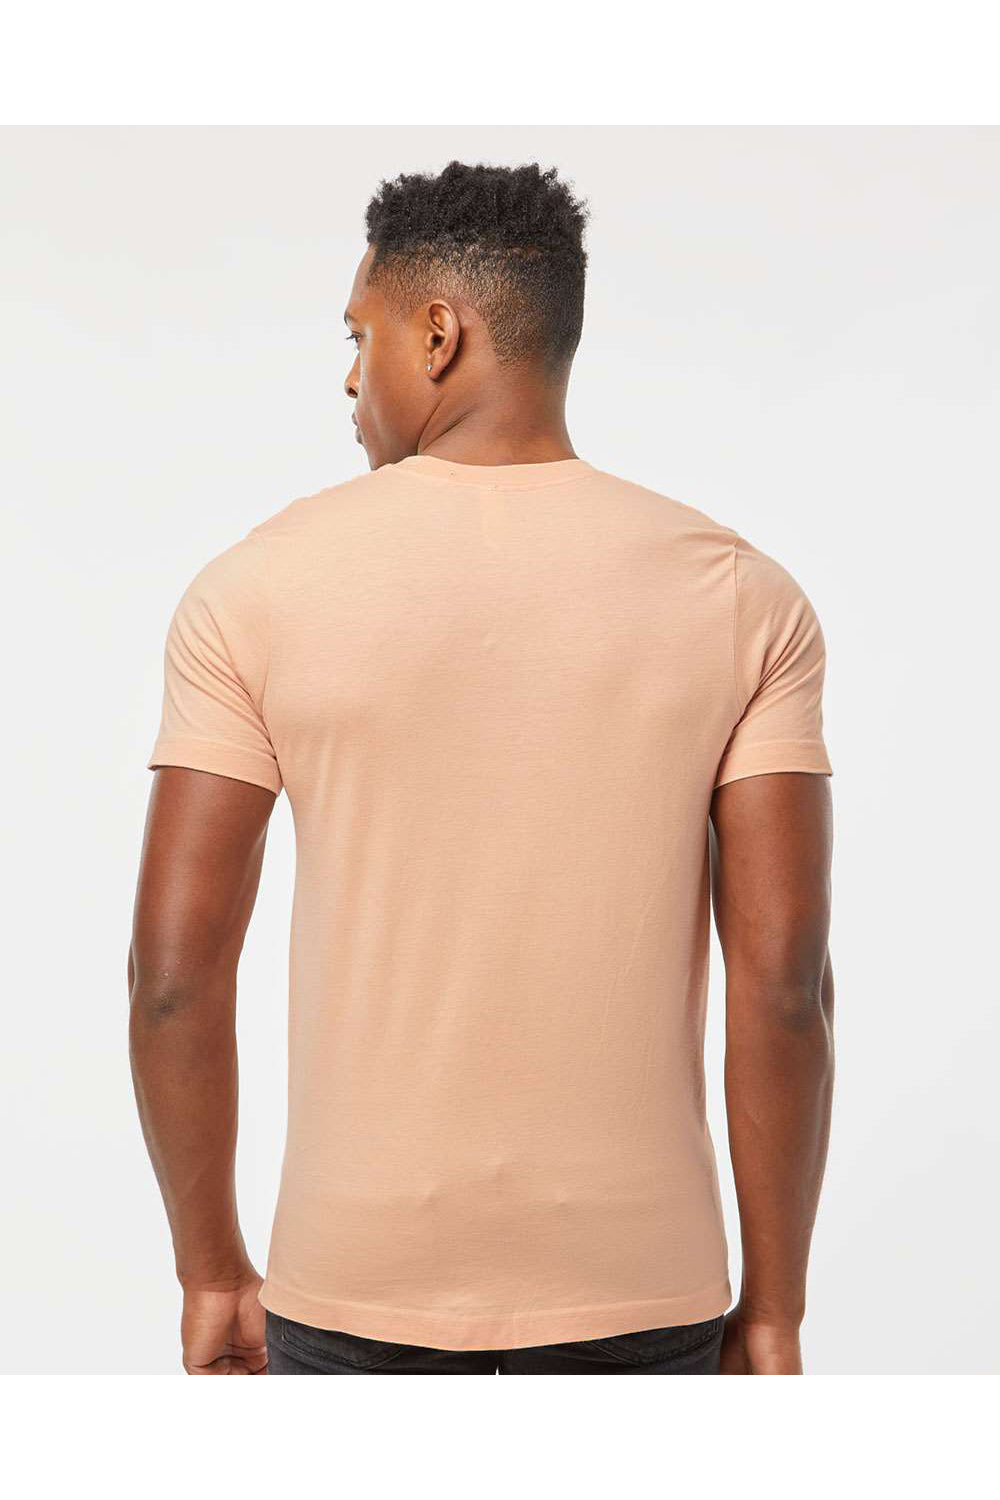 Tultex 502 Mens Premium Short Sleeve Crewneck T-Shirt Peach Model Back